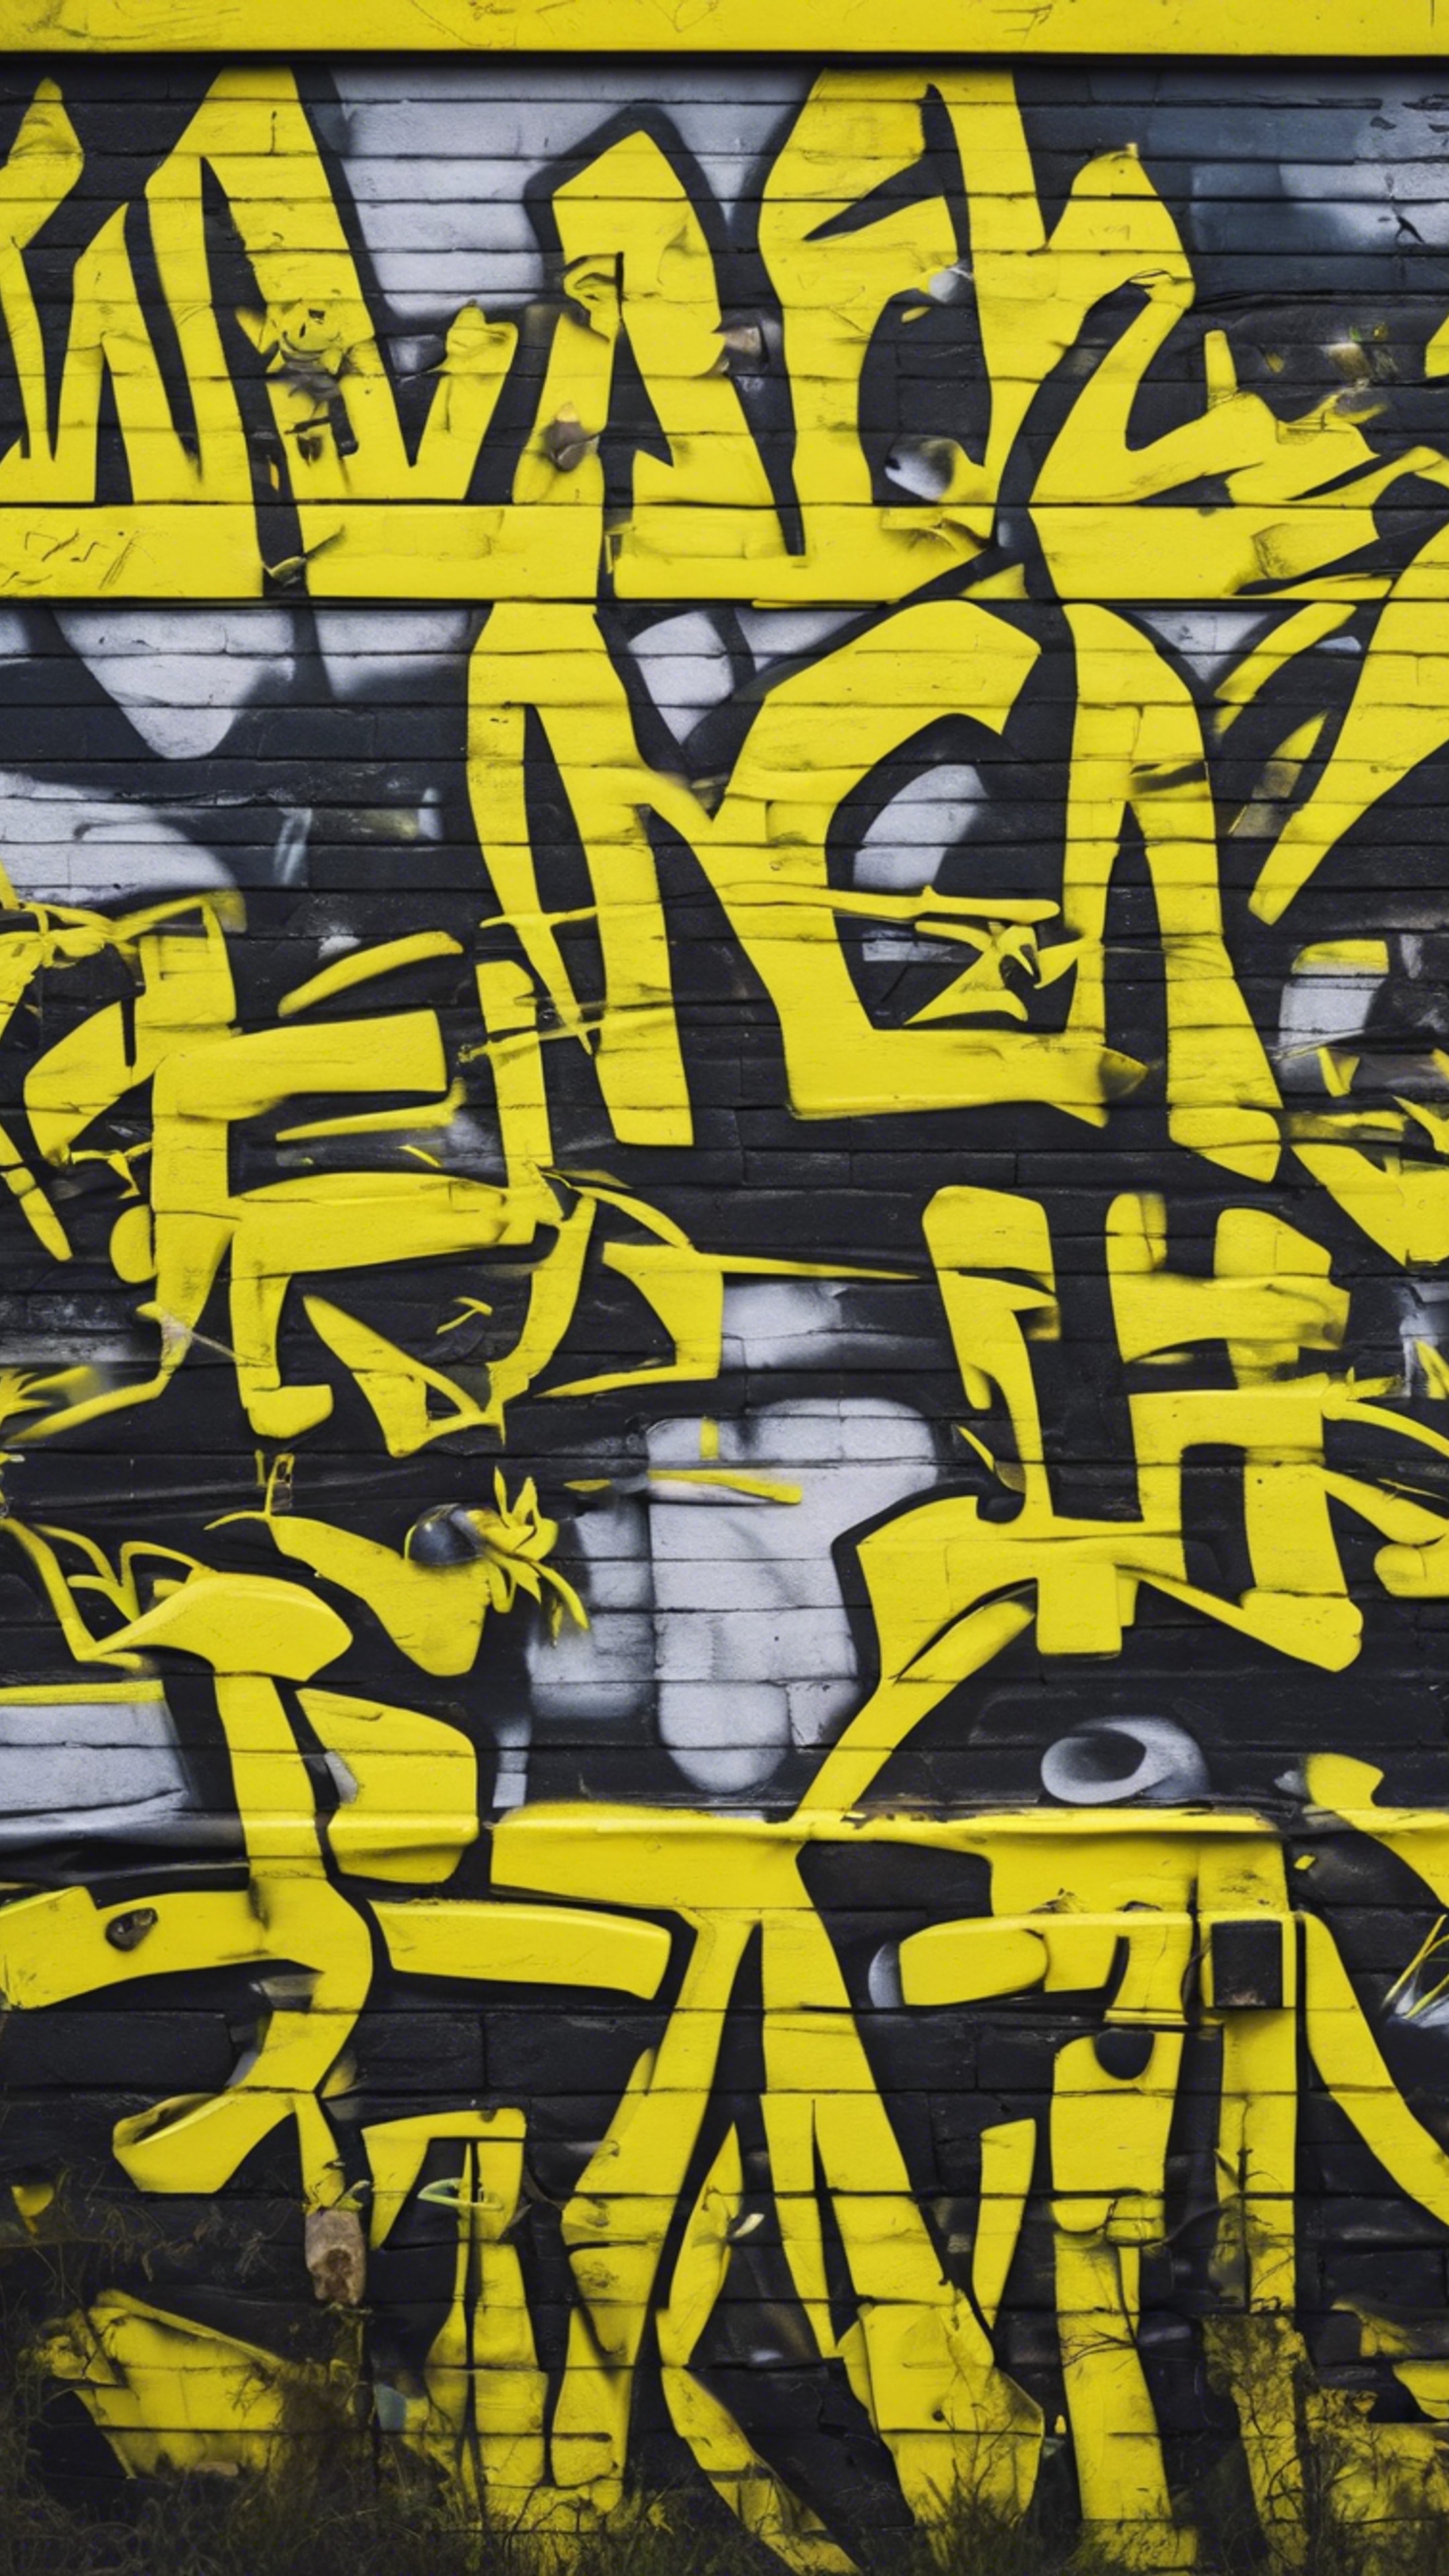 An urban graffiti wall consisting of wild neon yellow graphics. Tapéta[c33d158e57ea4e1b8c8e]